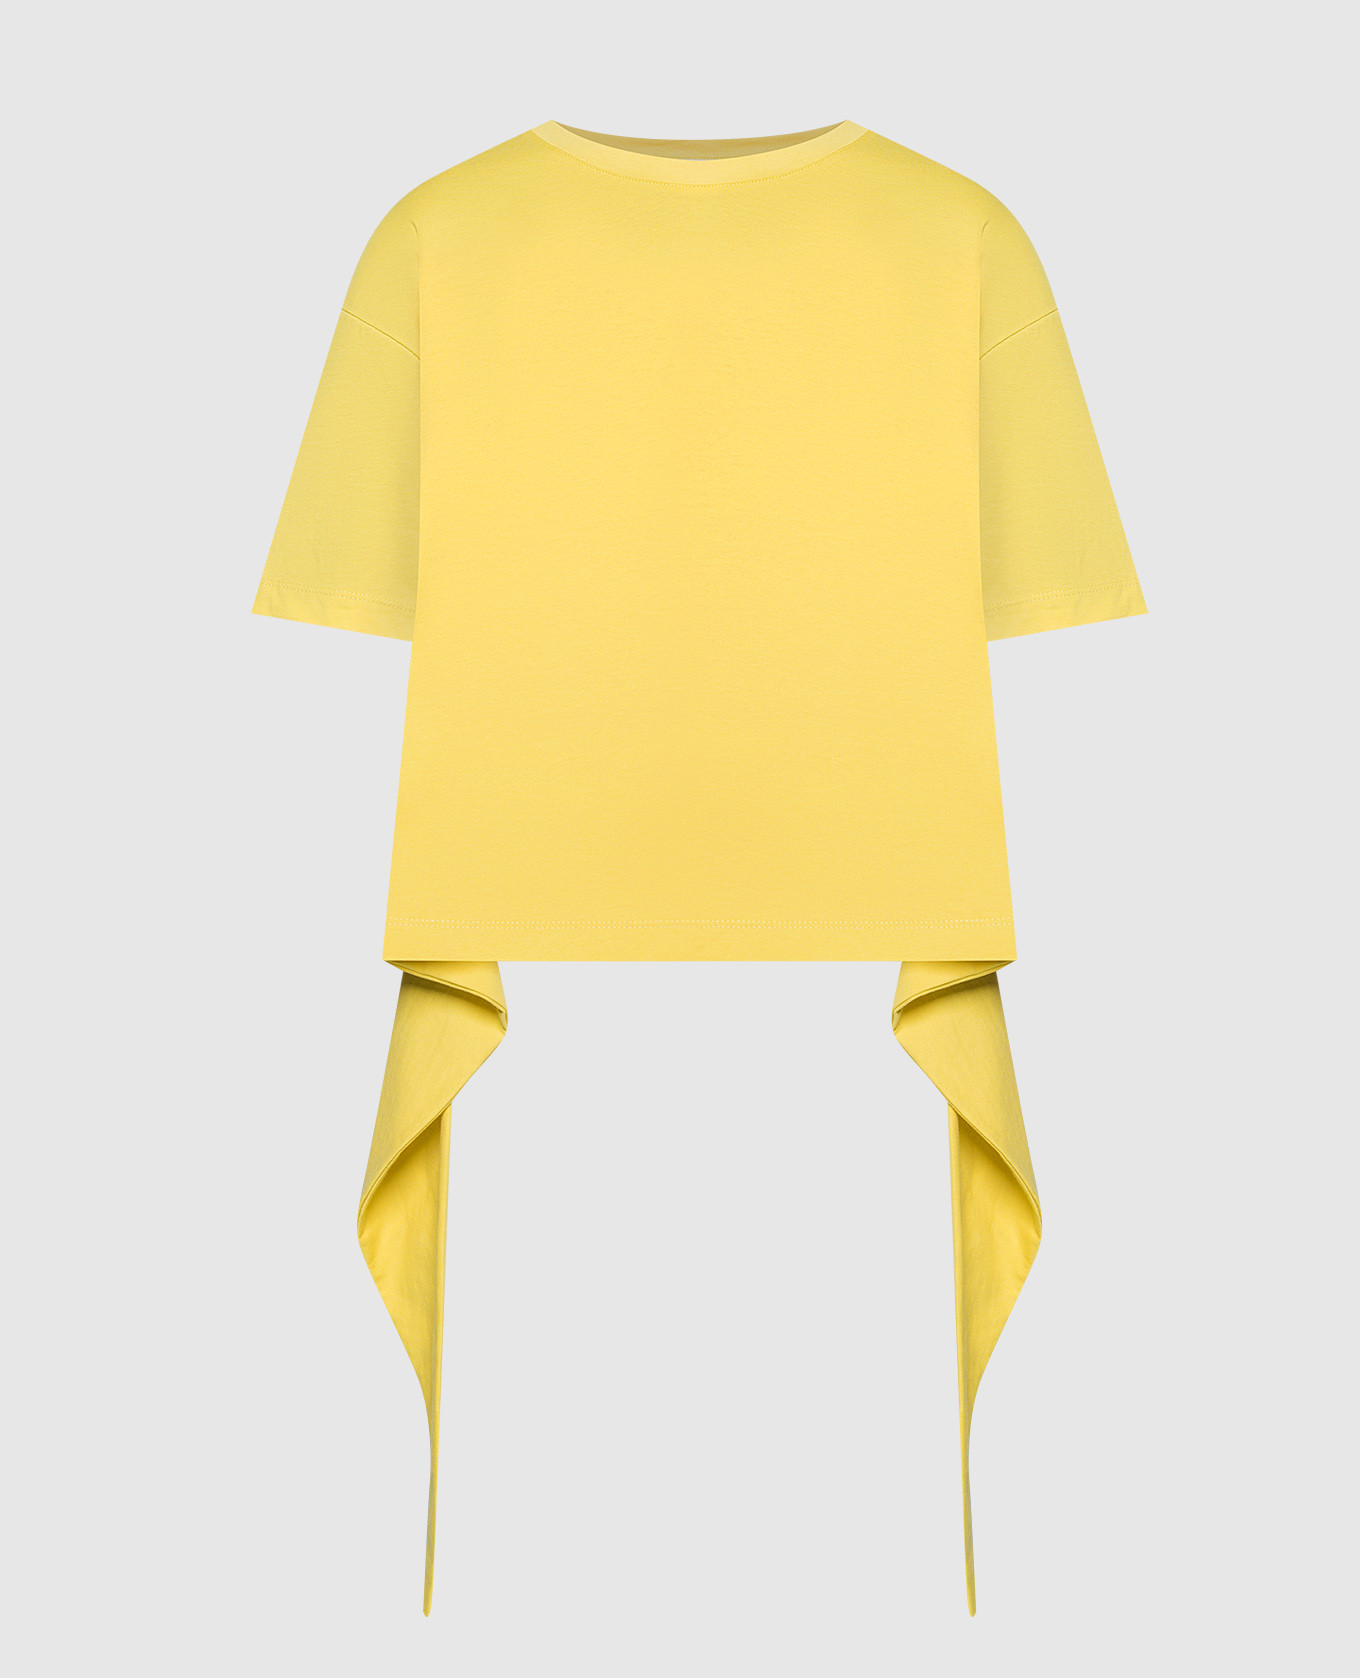 Yellow t-shirt with an asymmetrical bottom